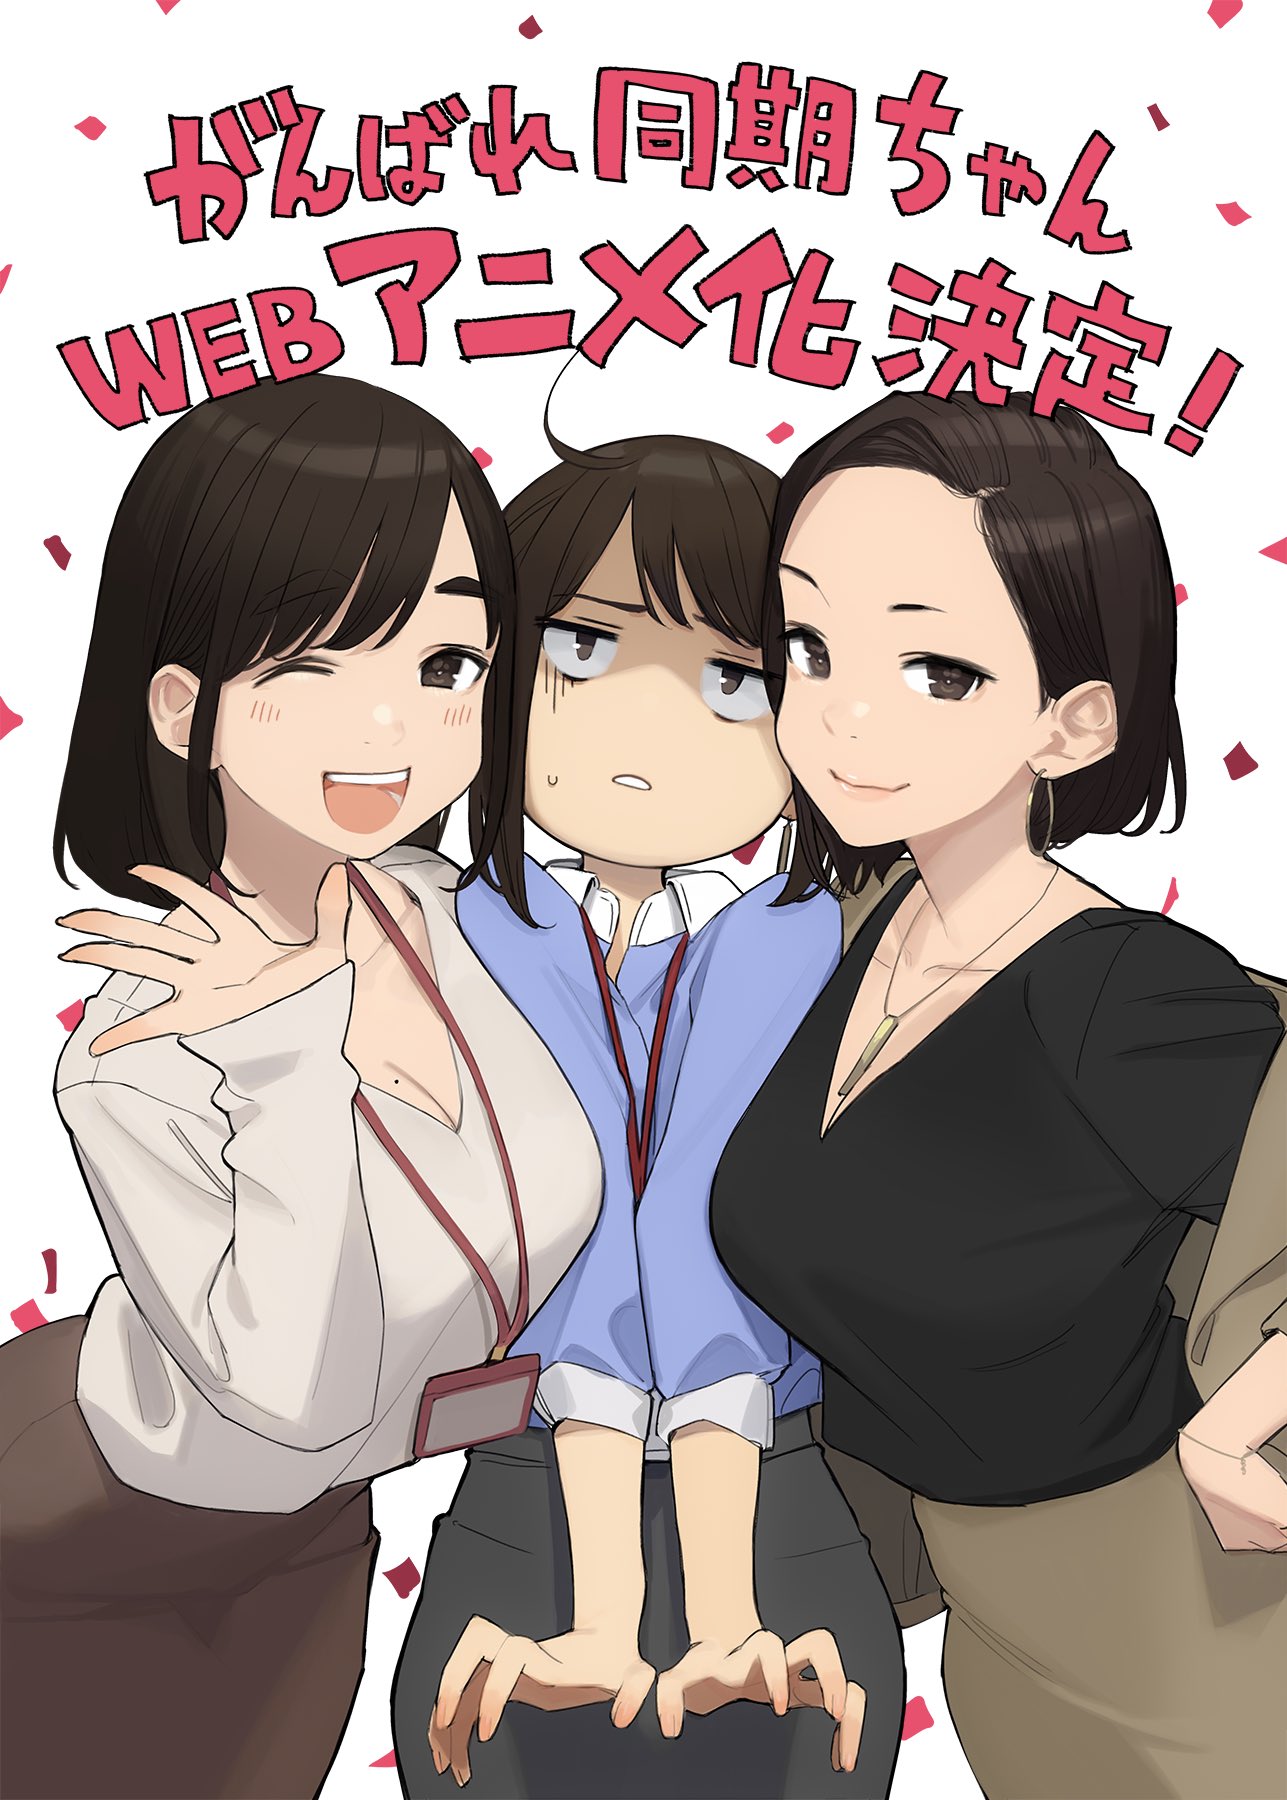 Ganbare Dōki-chan by Miru Tights Creator Gets Web Anime Adaptation